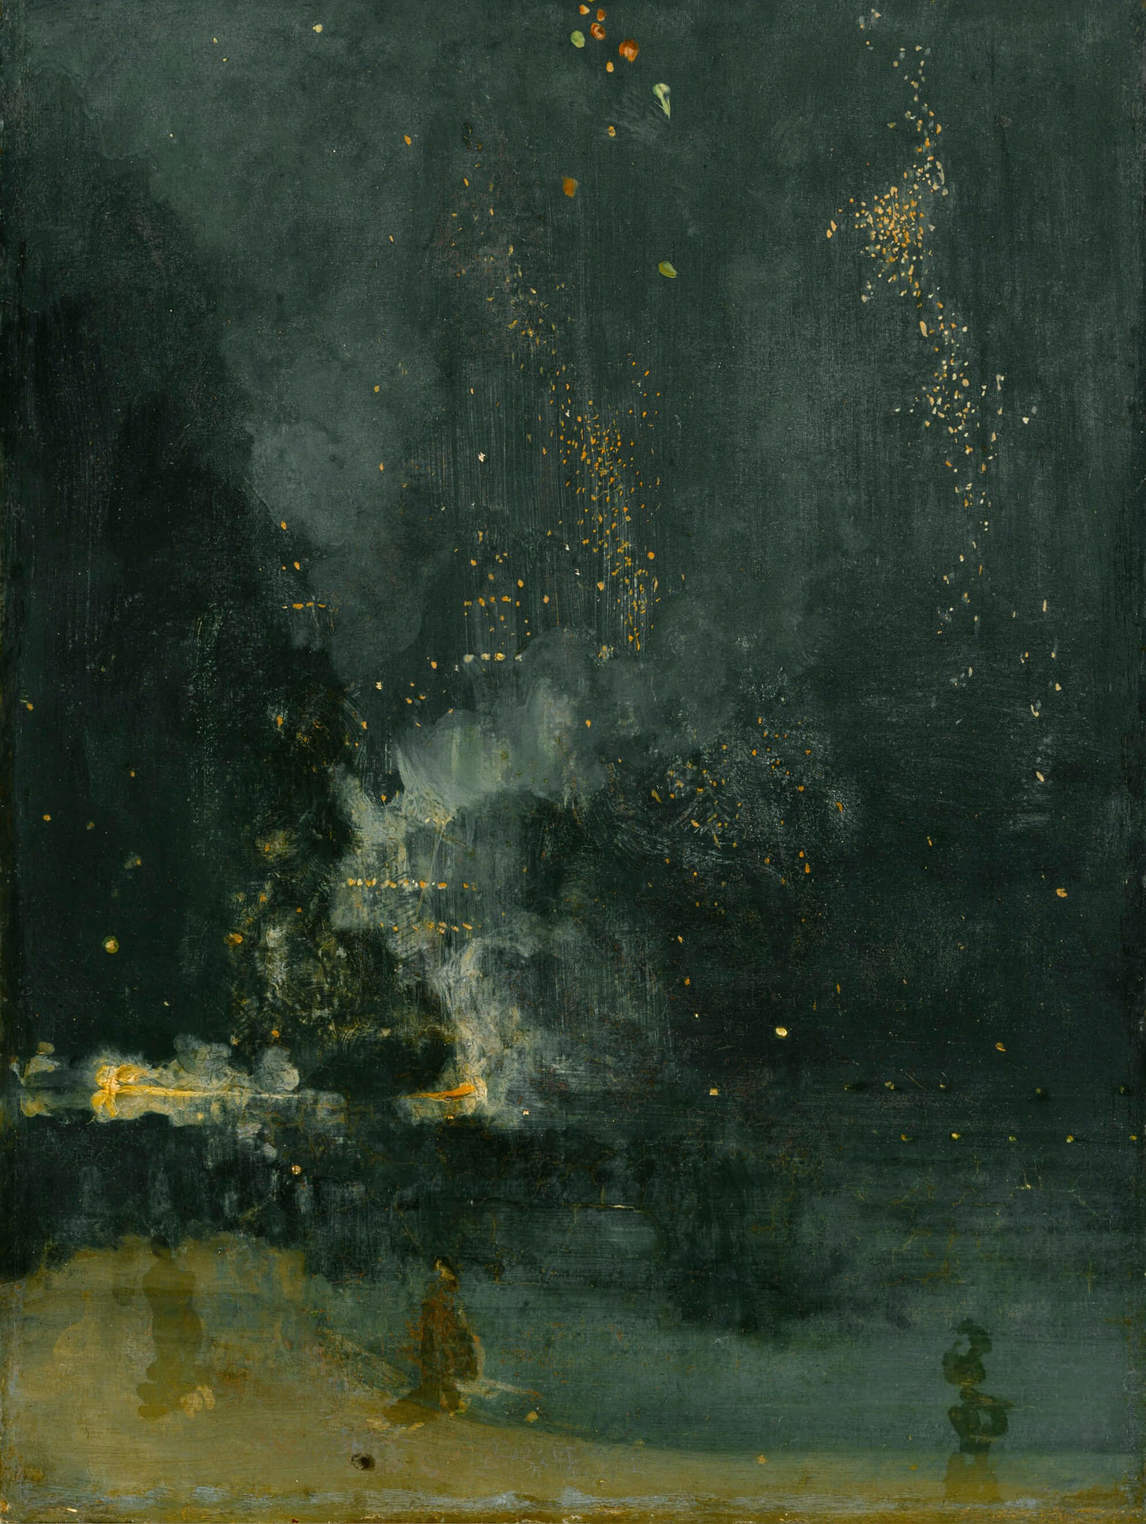 James Abbott McNeill Whistler, Nocturne in Black and Gold, The Falling Rocket (Nocturne en noir et or : la fusée qui retombe), 1875